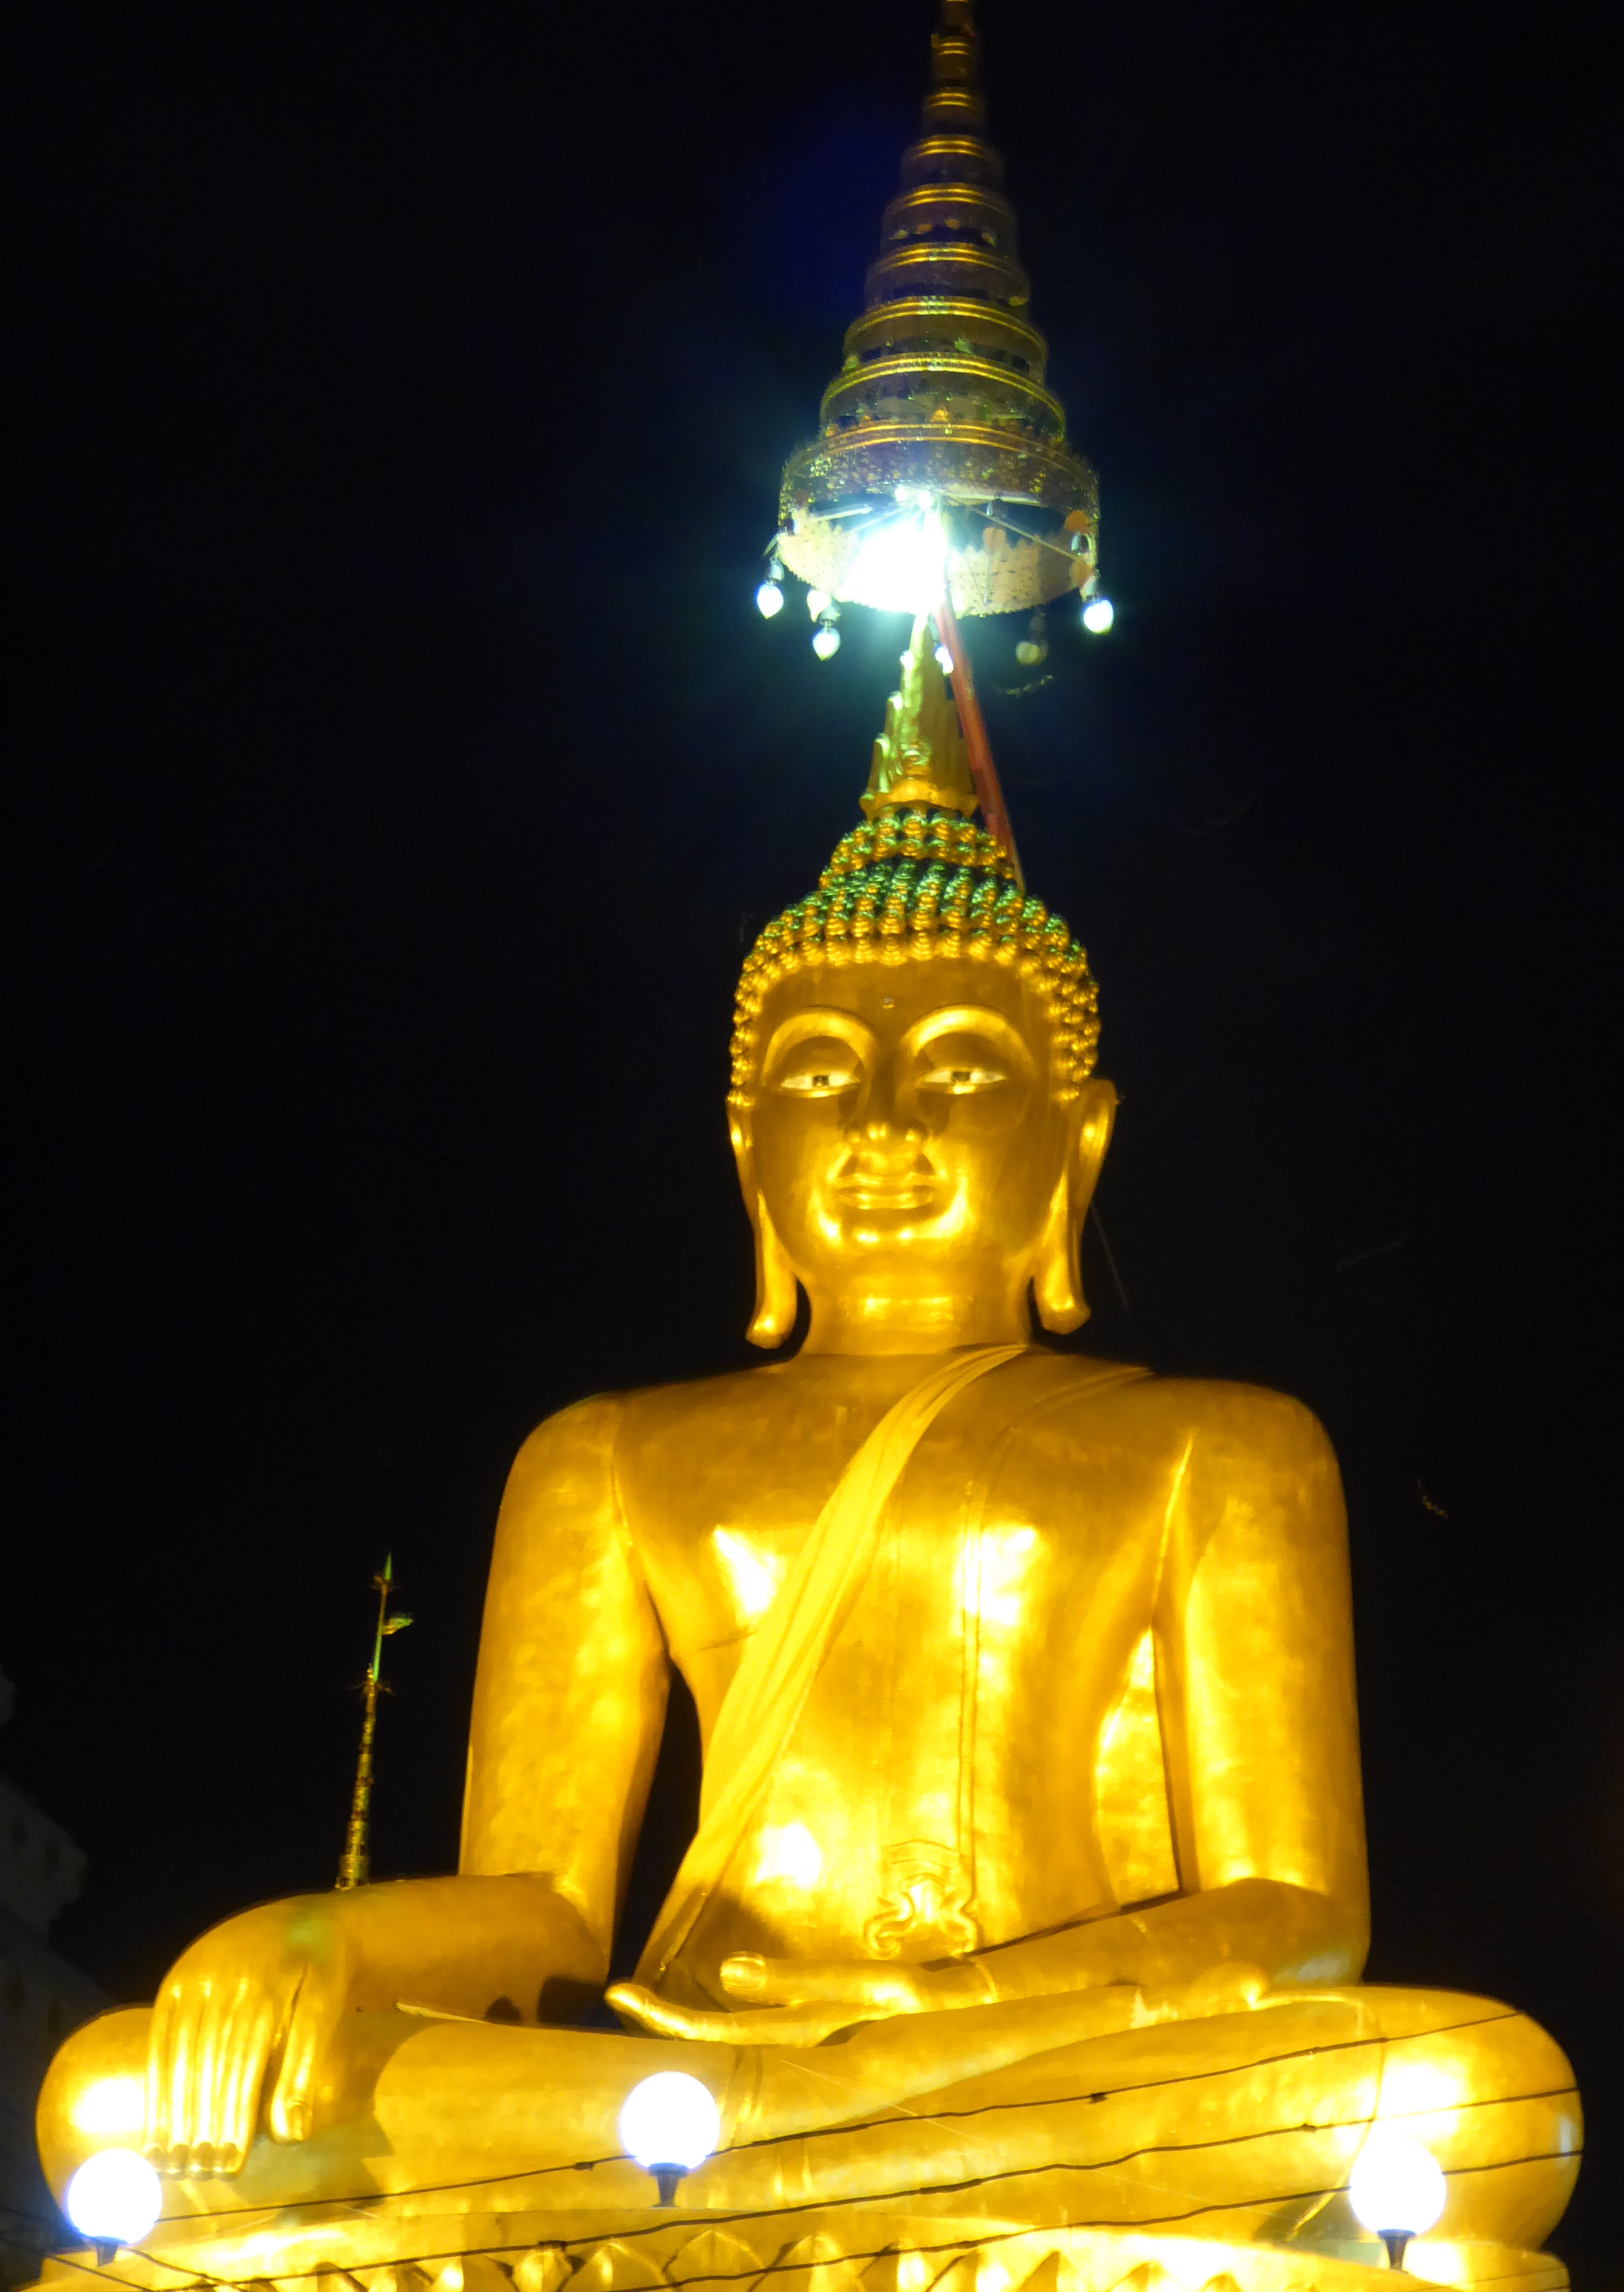 a golden Buddha statue at night